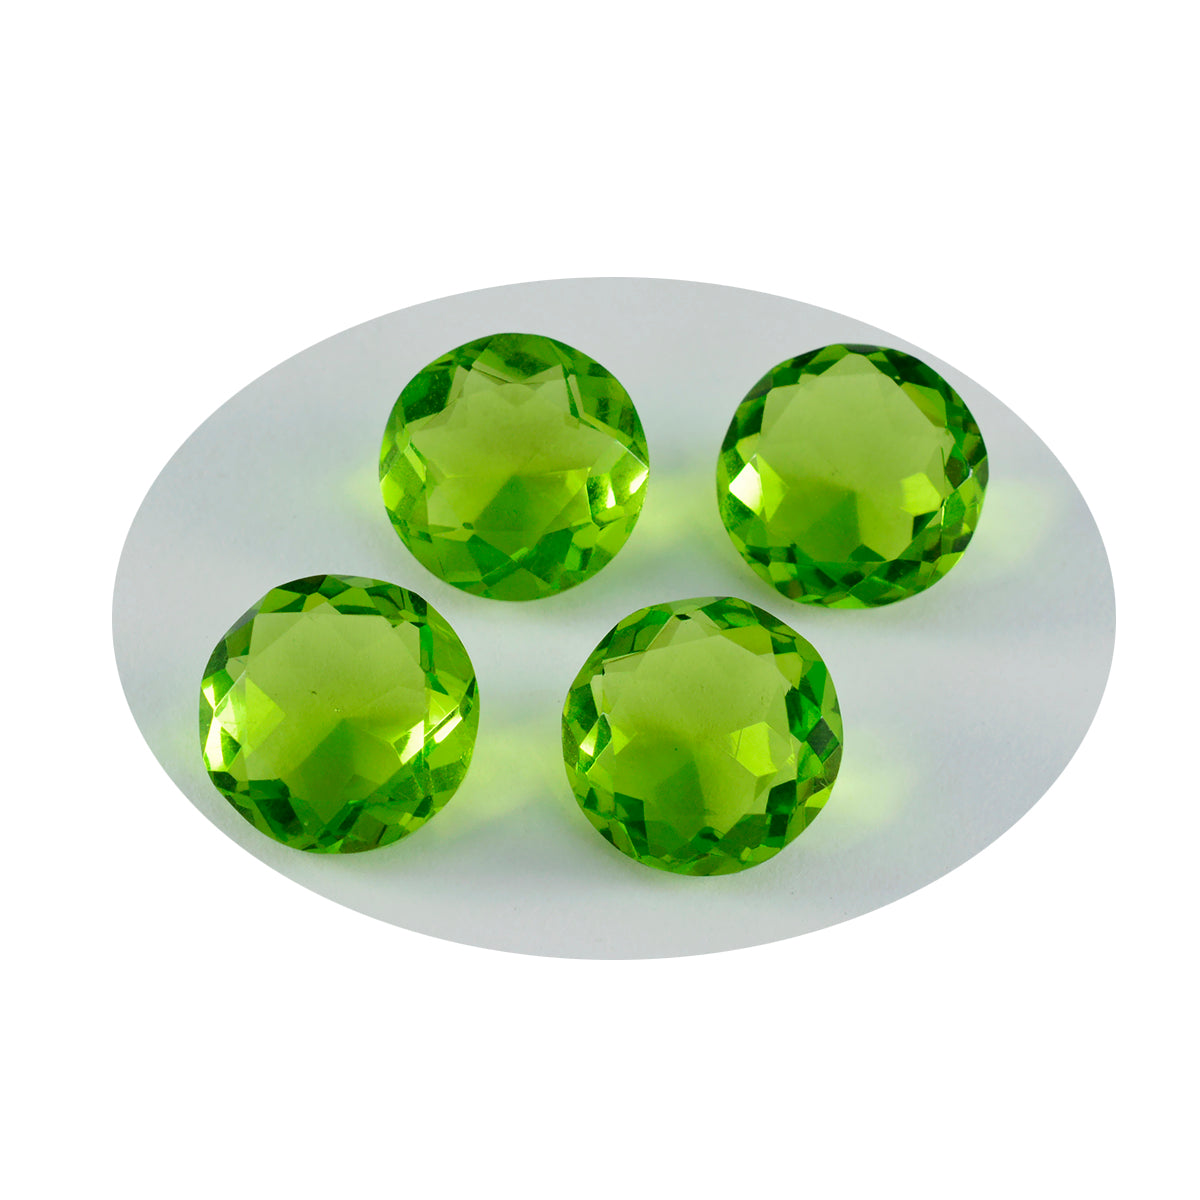 Riyogems 1PC Green Peridot CZ Faceted 10x10 mm Round Shape Good Quality Loose Gems